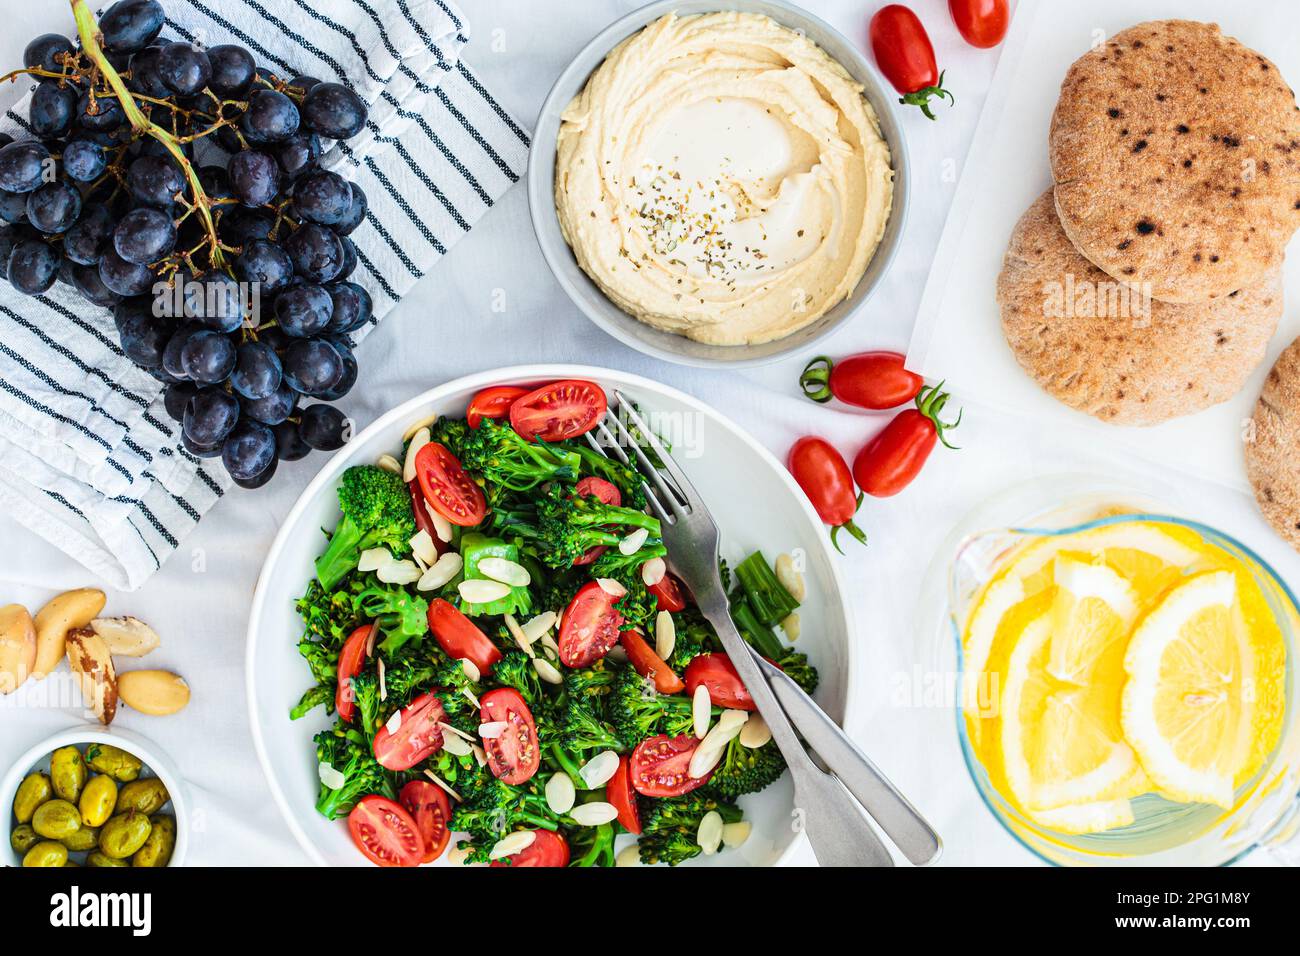 Vegan picnic food: hummus, lemonade, broccoli salad and fruits on a white blanket on the grass, top view. Stock Photo